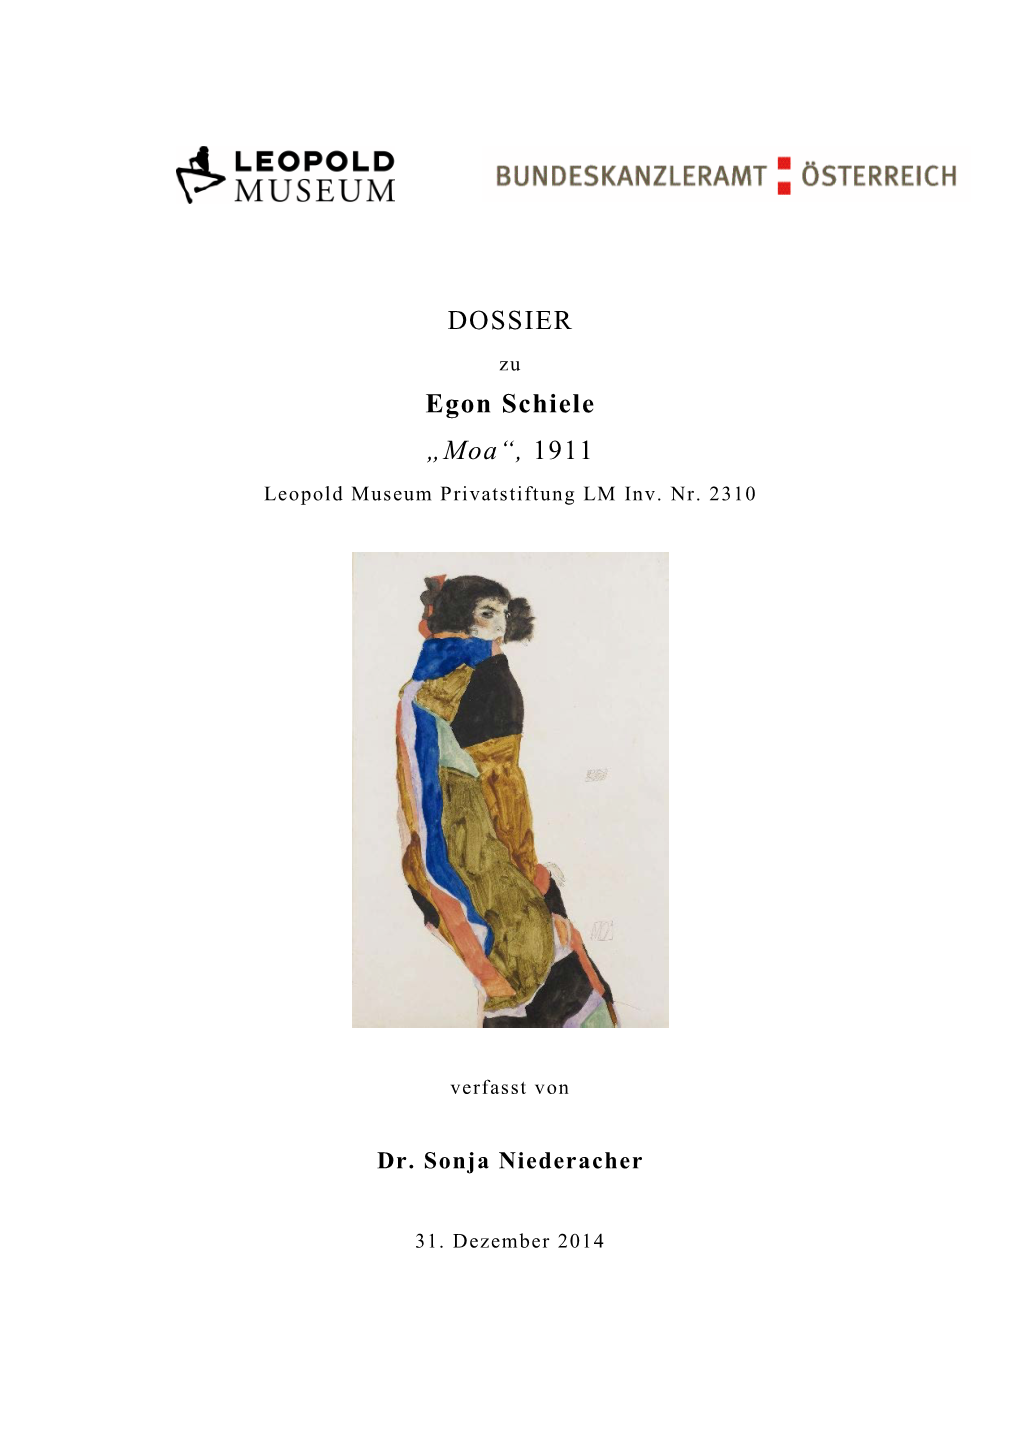 Dossier Zu Egon Schiele "Moa", 1911 LM Inv. Nr. 2310